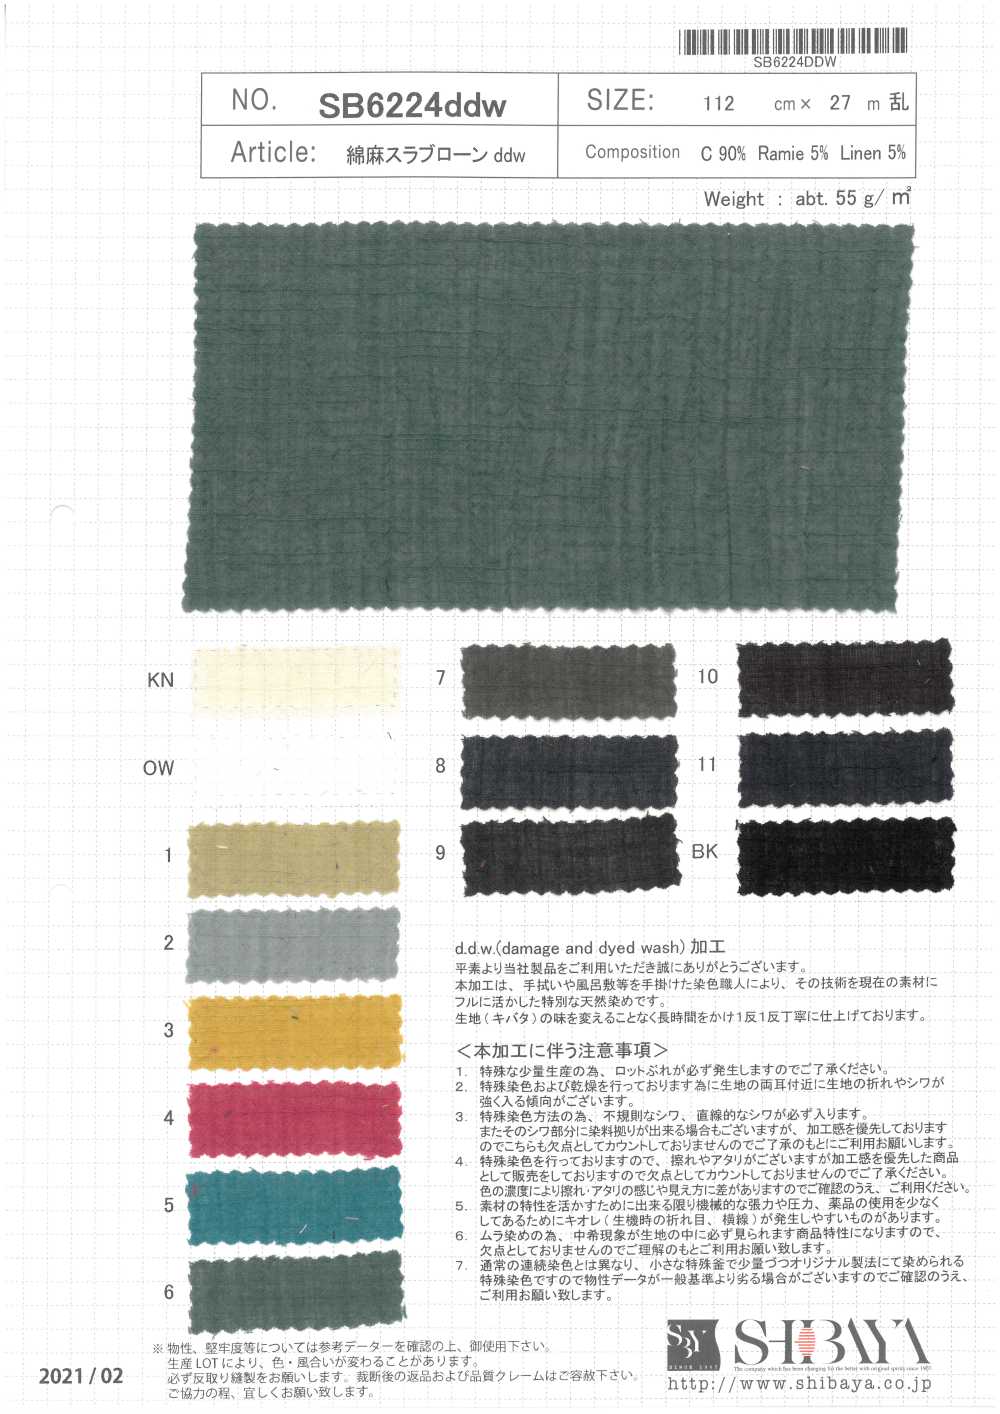 SB6224ddw Gramado De Laje De Linho DDW[Têxtil / Tecido] SHIBAYA